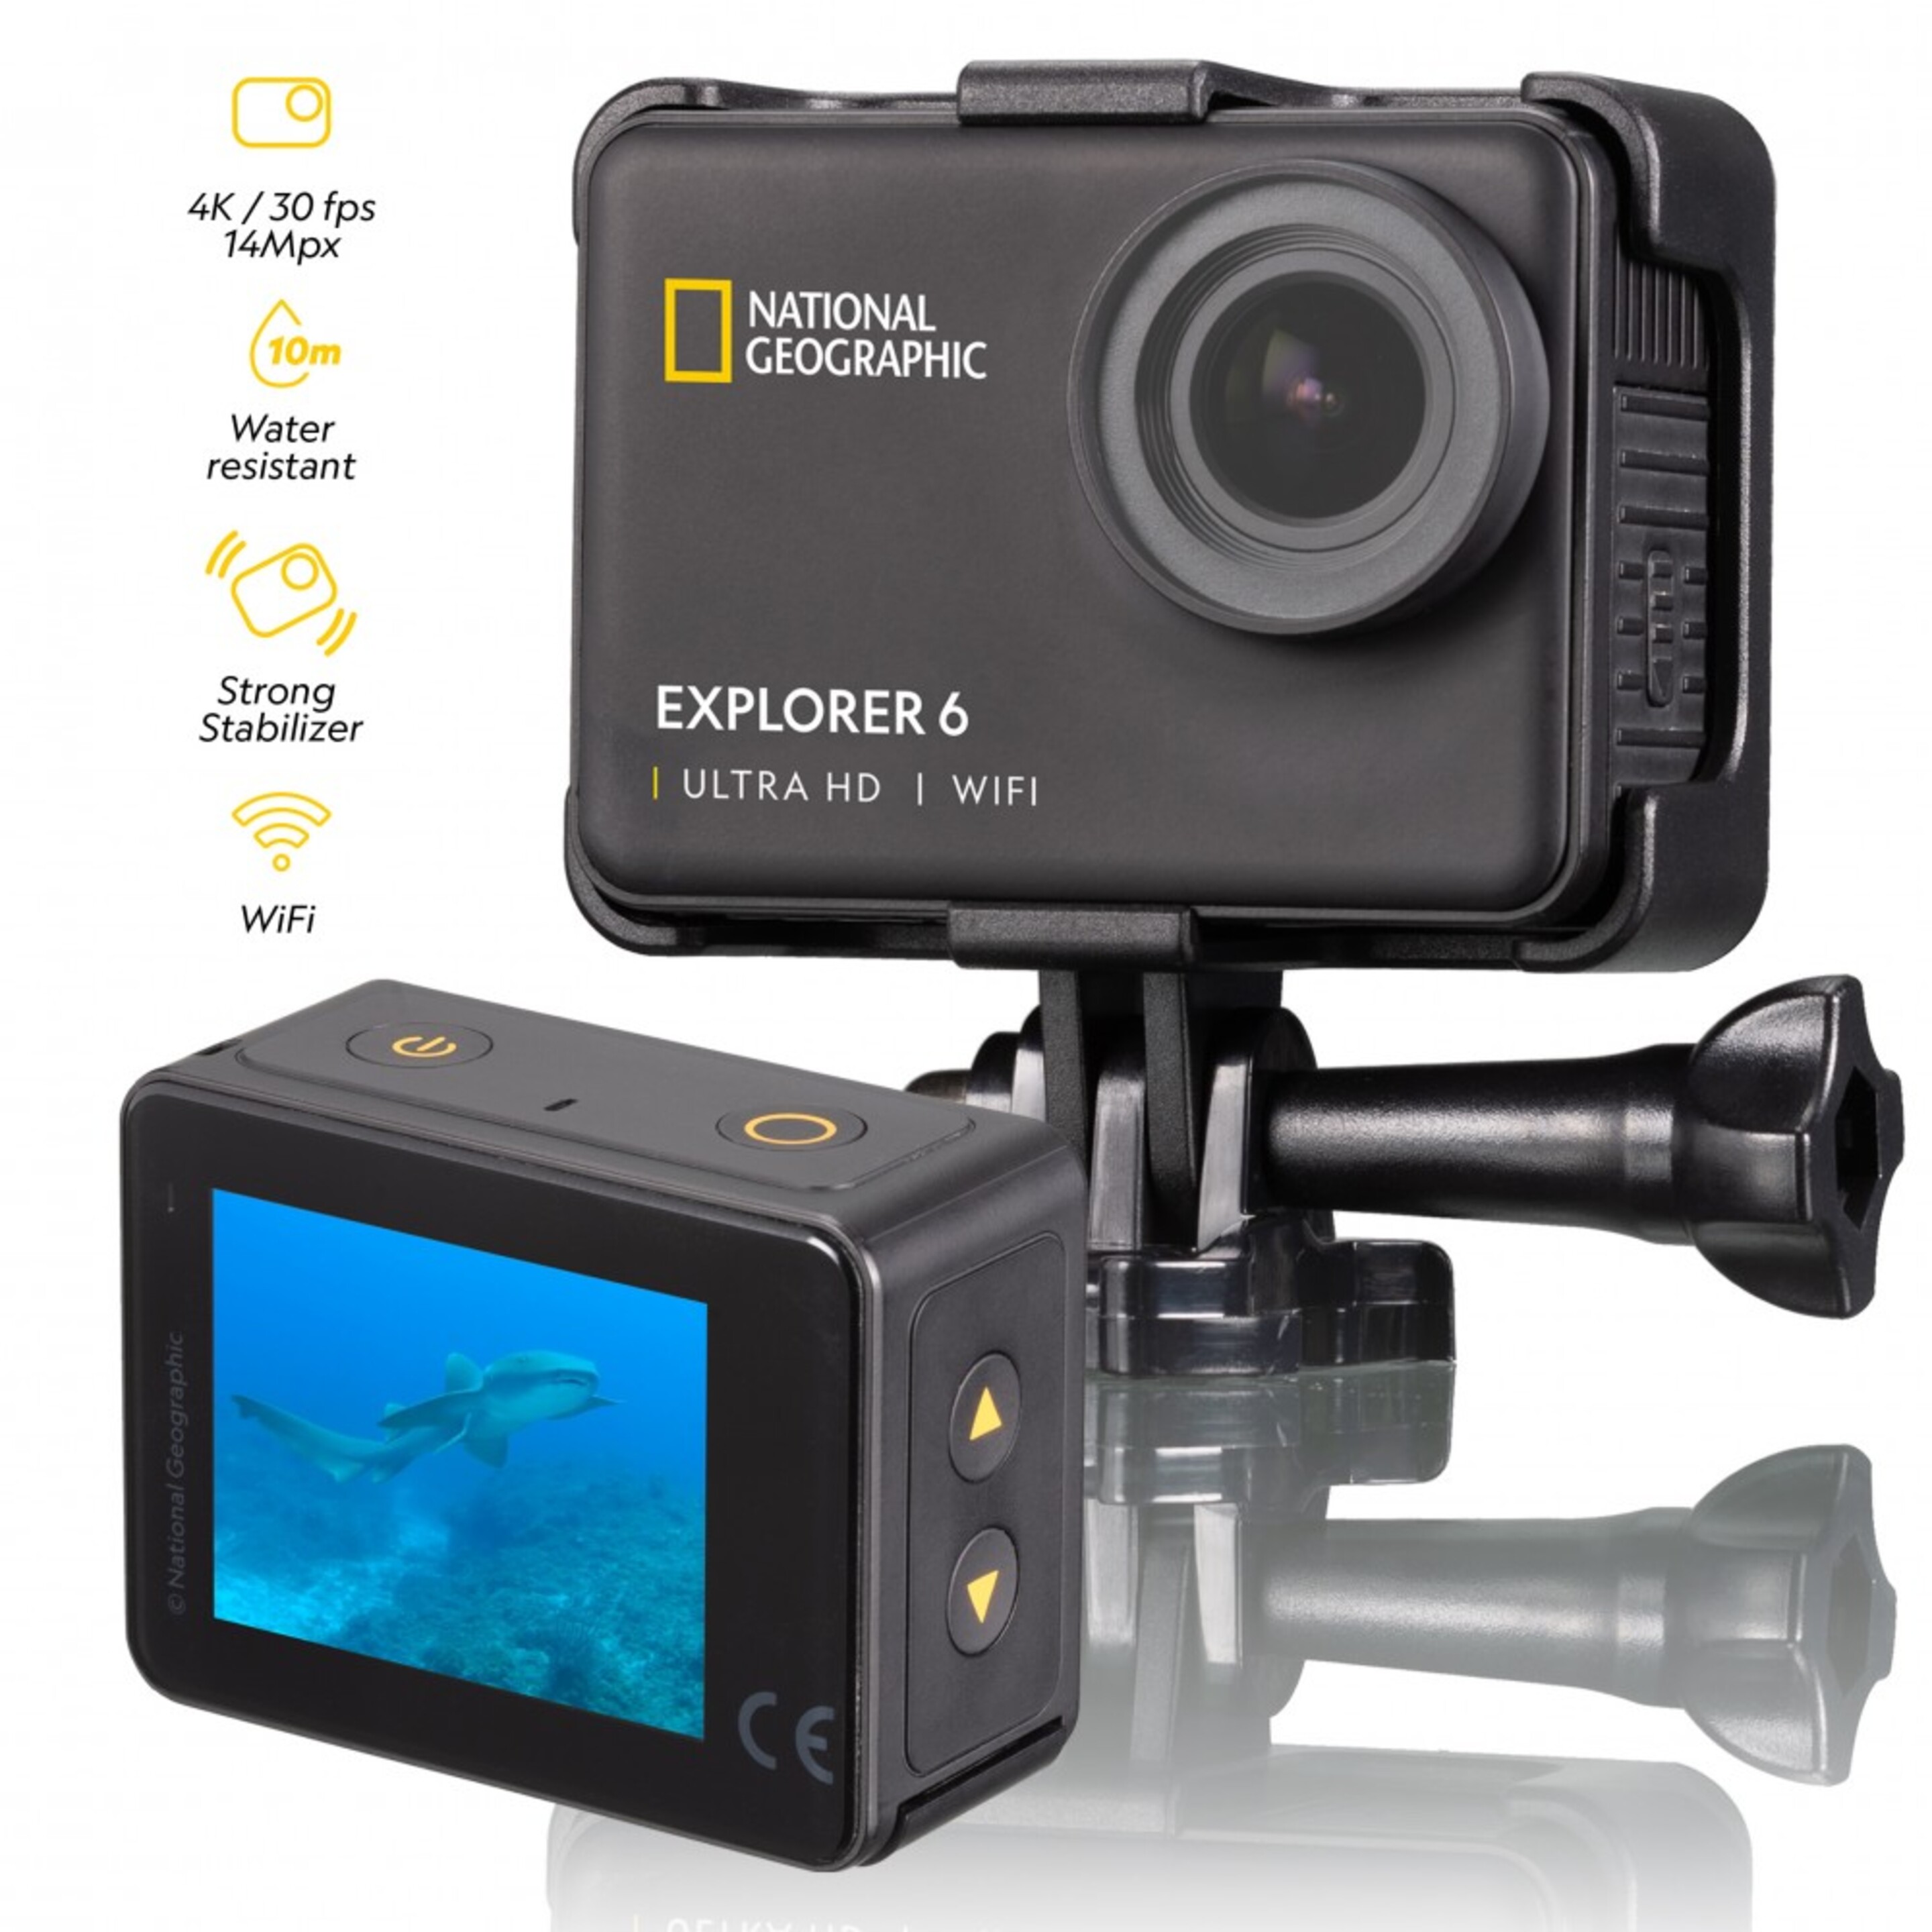 Cámara Deportiva Action Cam Explorer 6 National Geographic 4k Ultra-hd Con Accesorios Incluidos